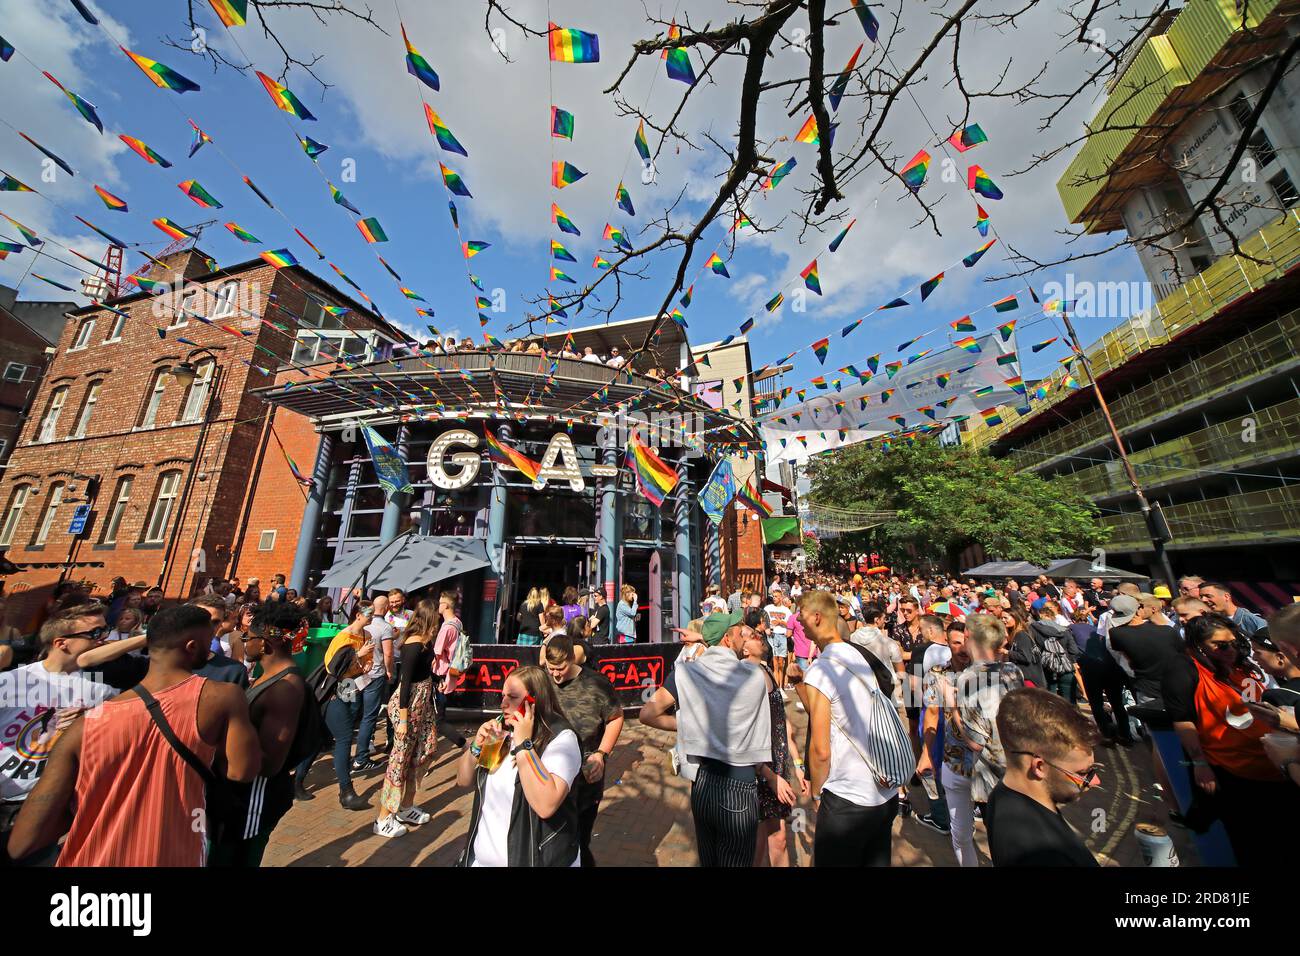 Manchester Pride - Canal Street / Bloom Street, Manchester, England, M1 3EZ Stockfoto